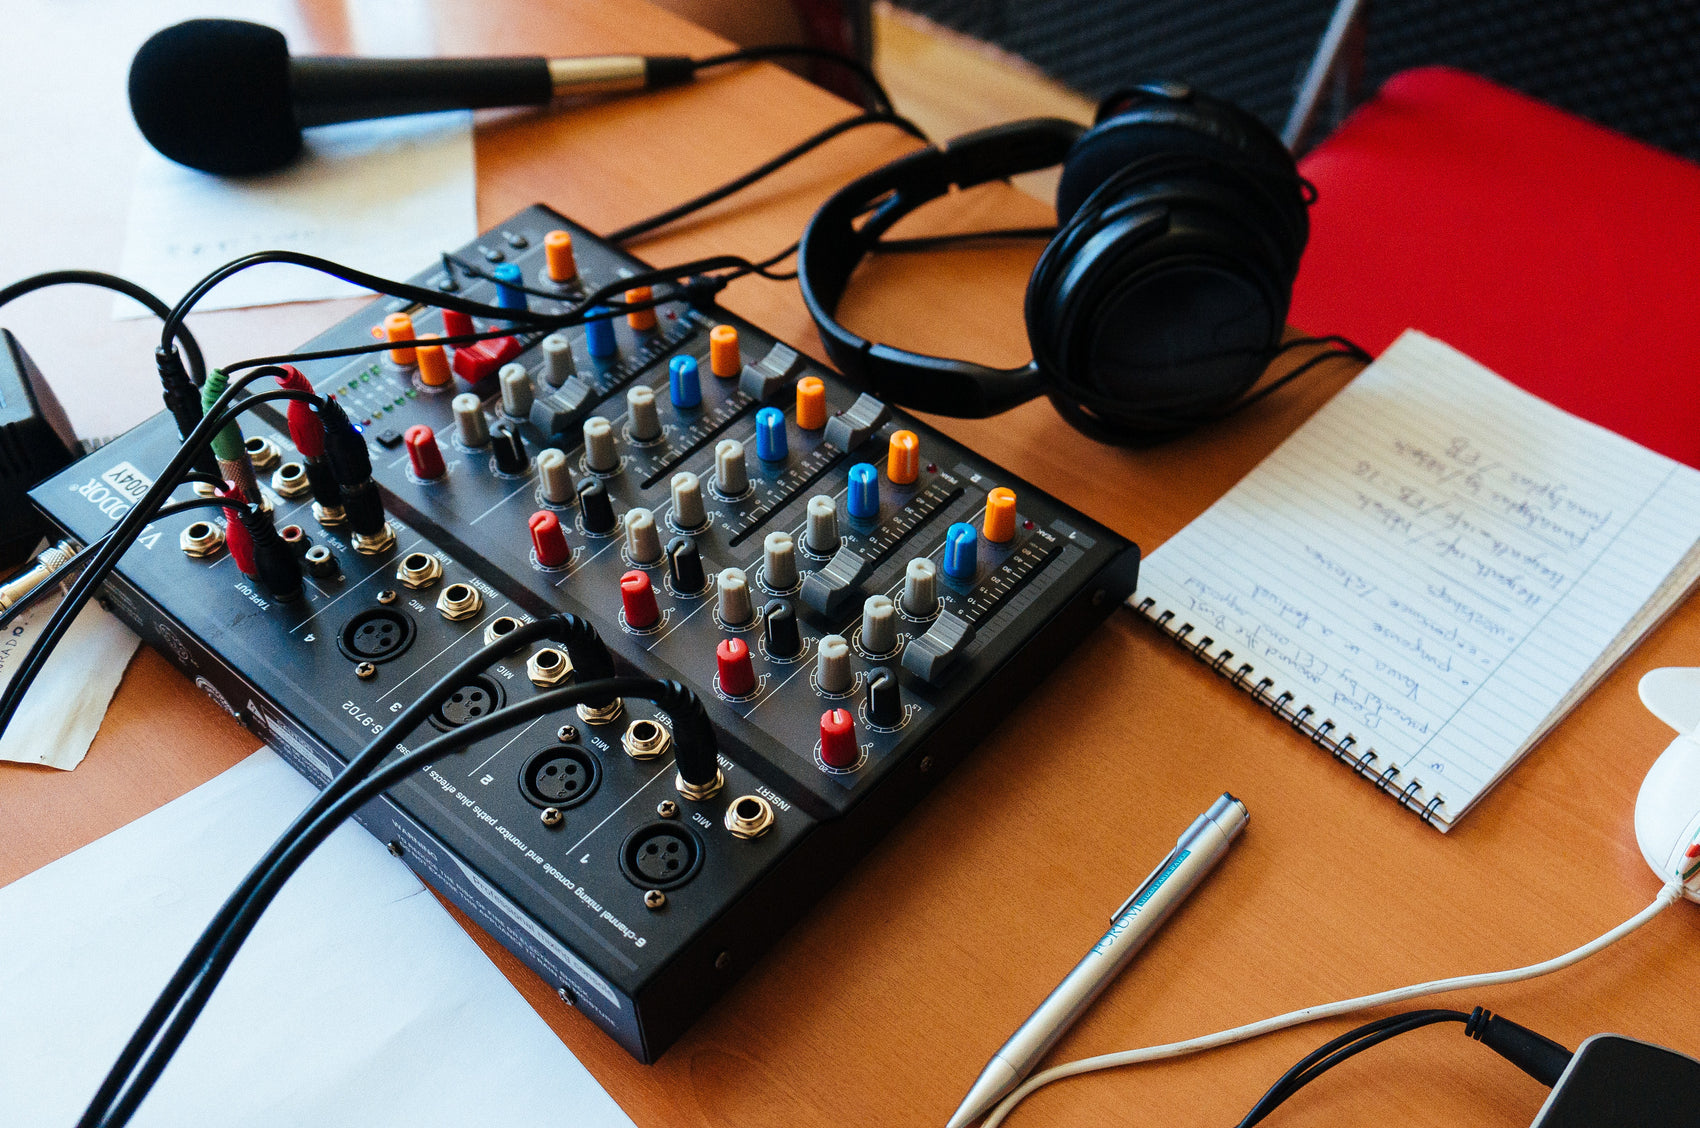 Home Recording Gear on Desk